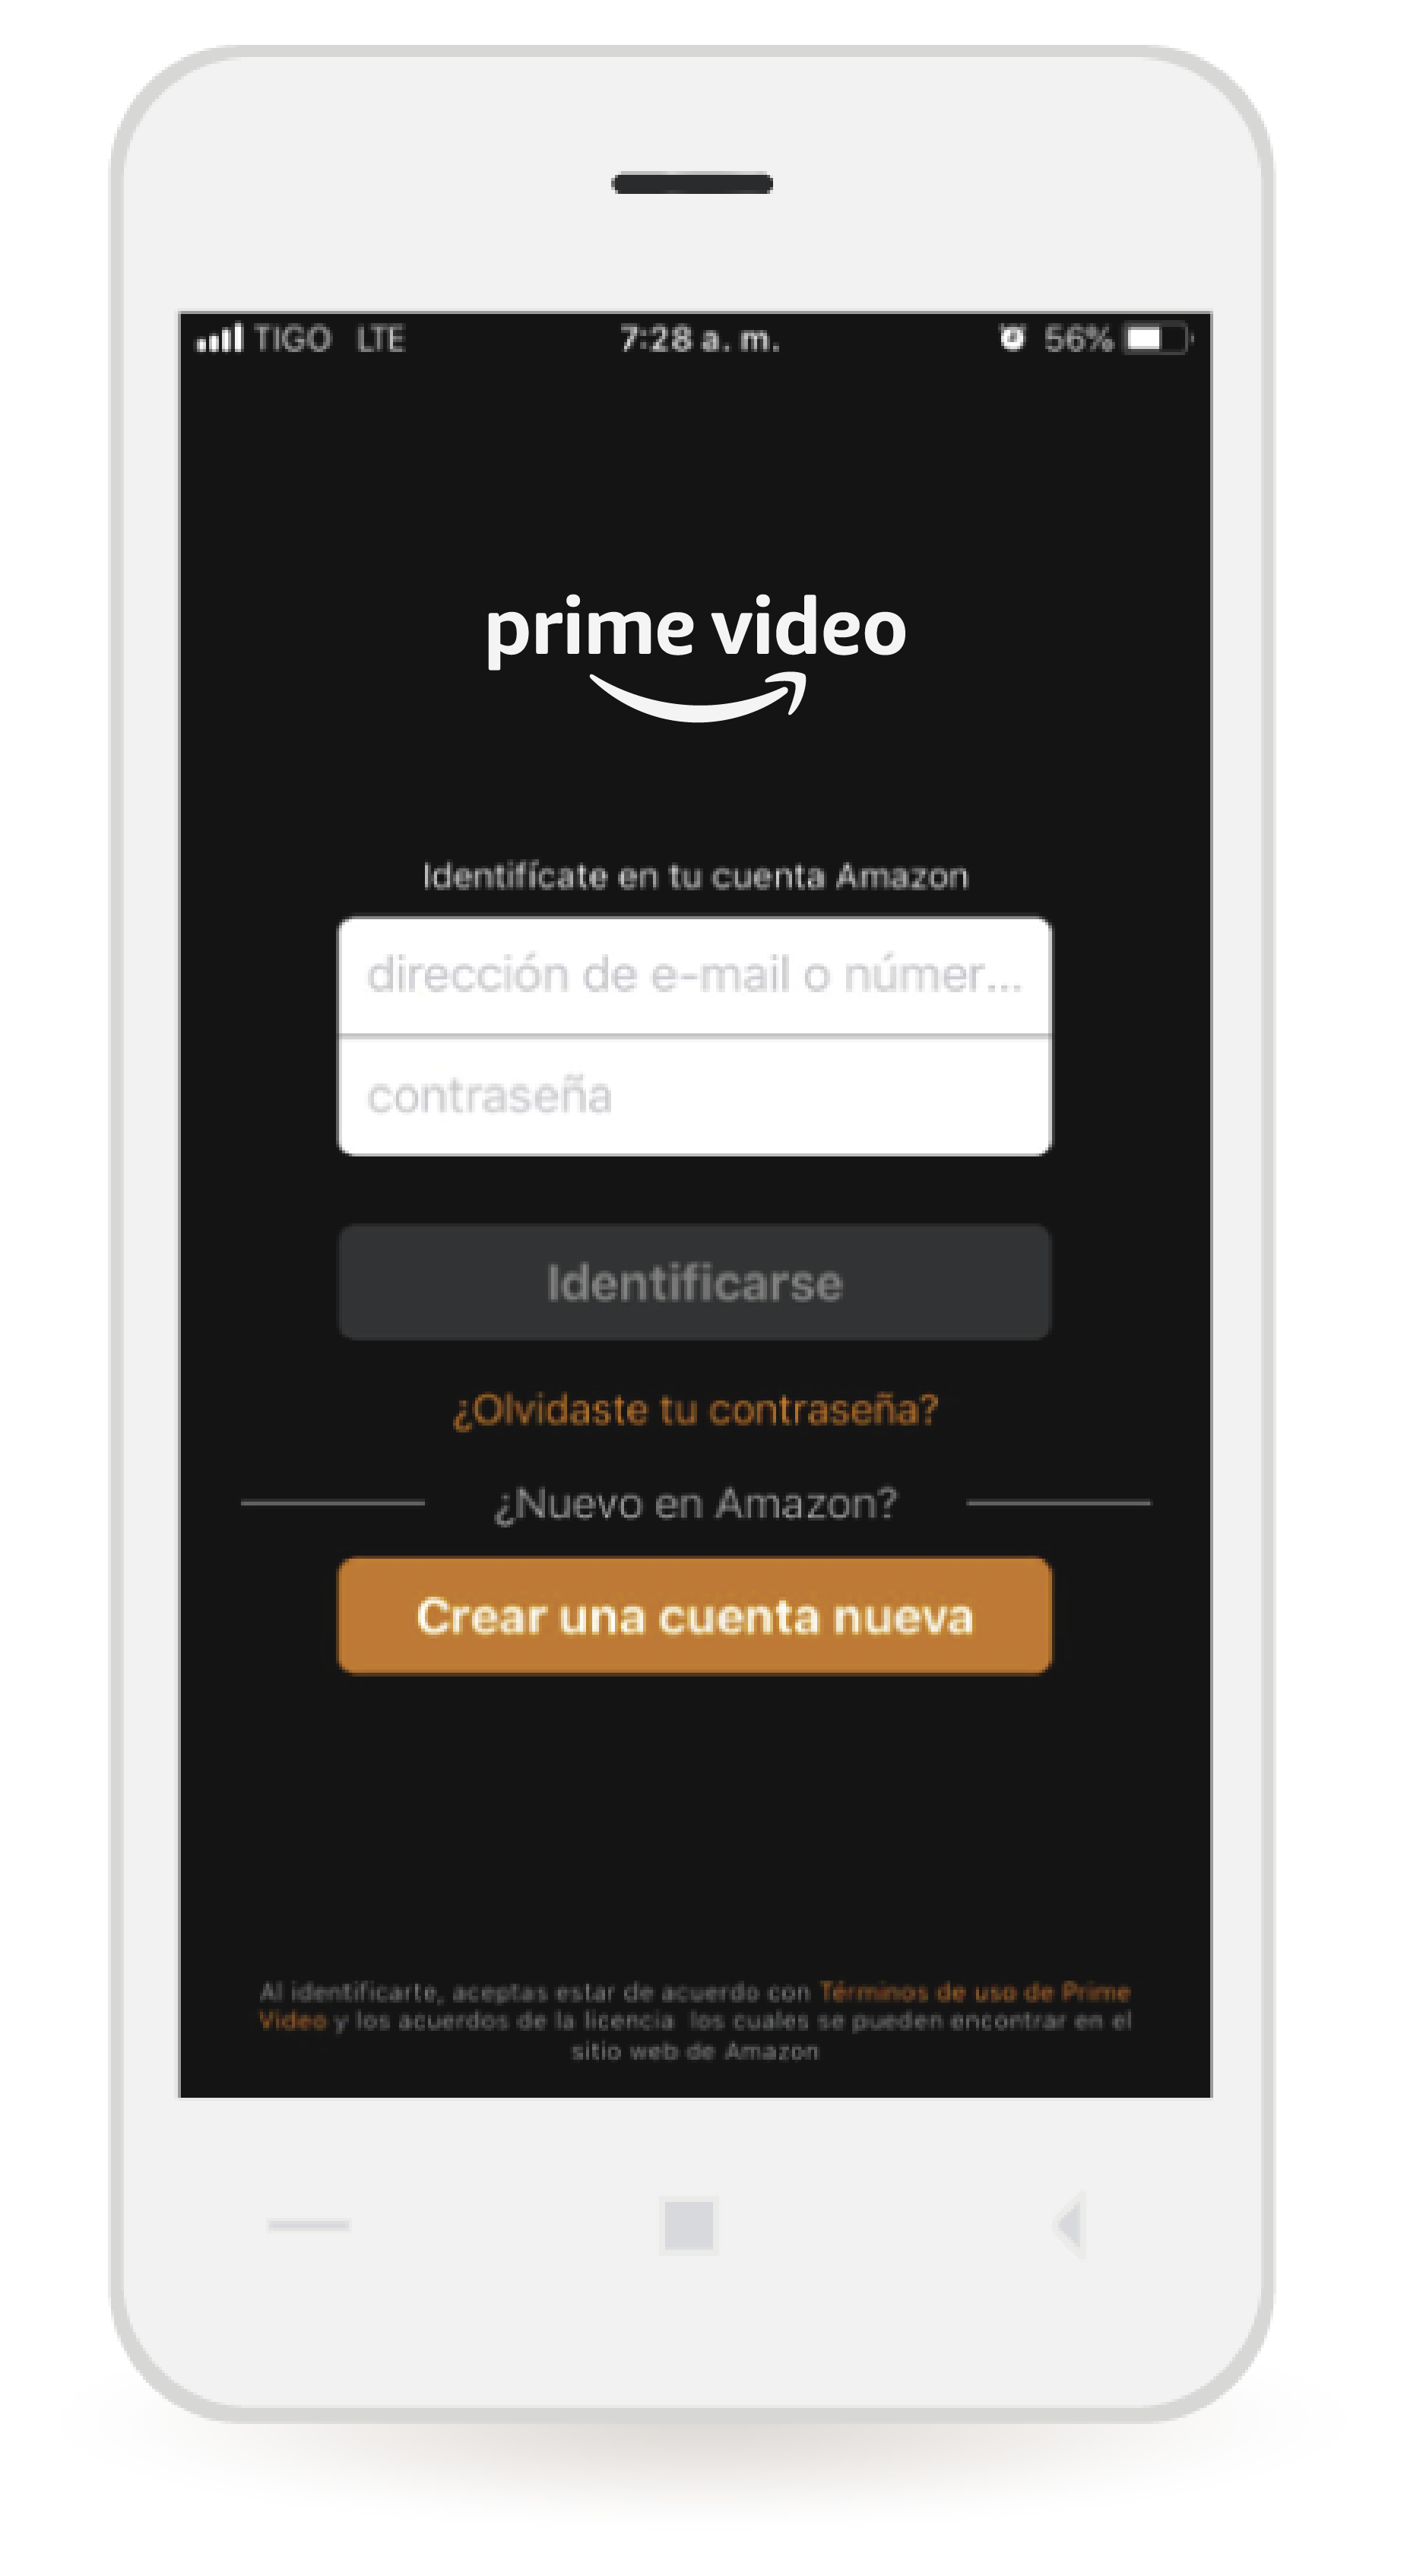 aw-amazon prime video app